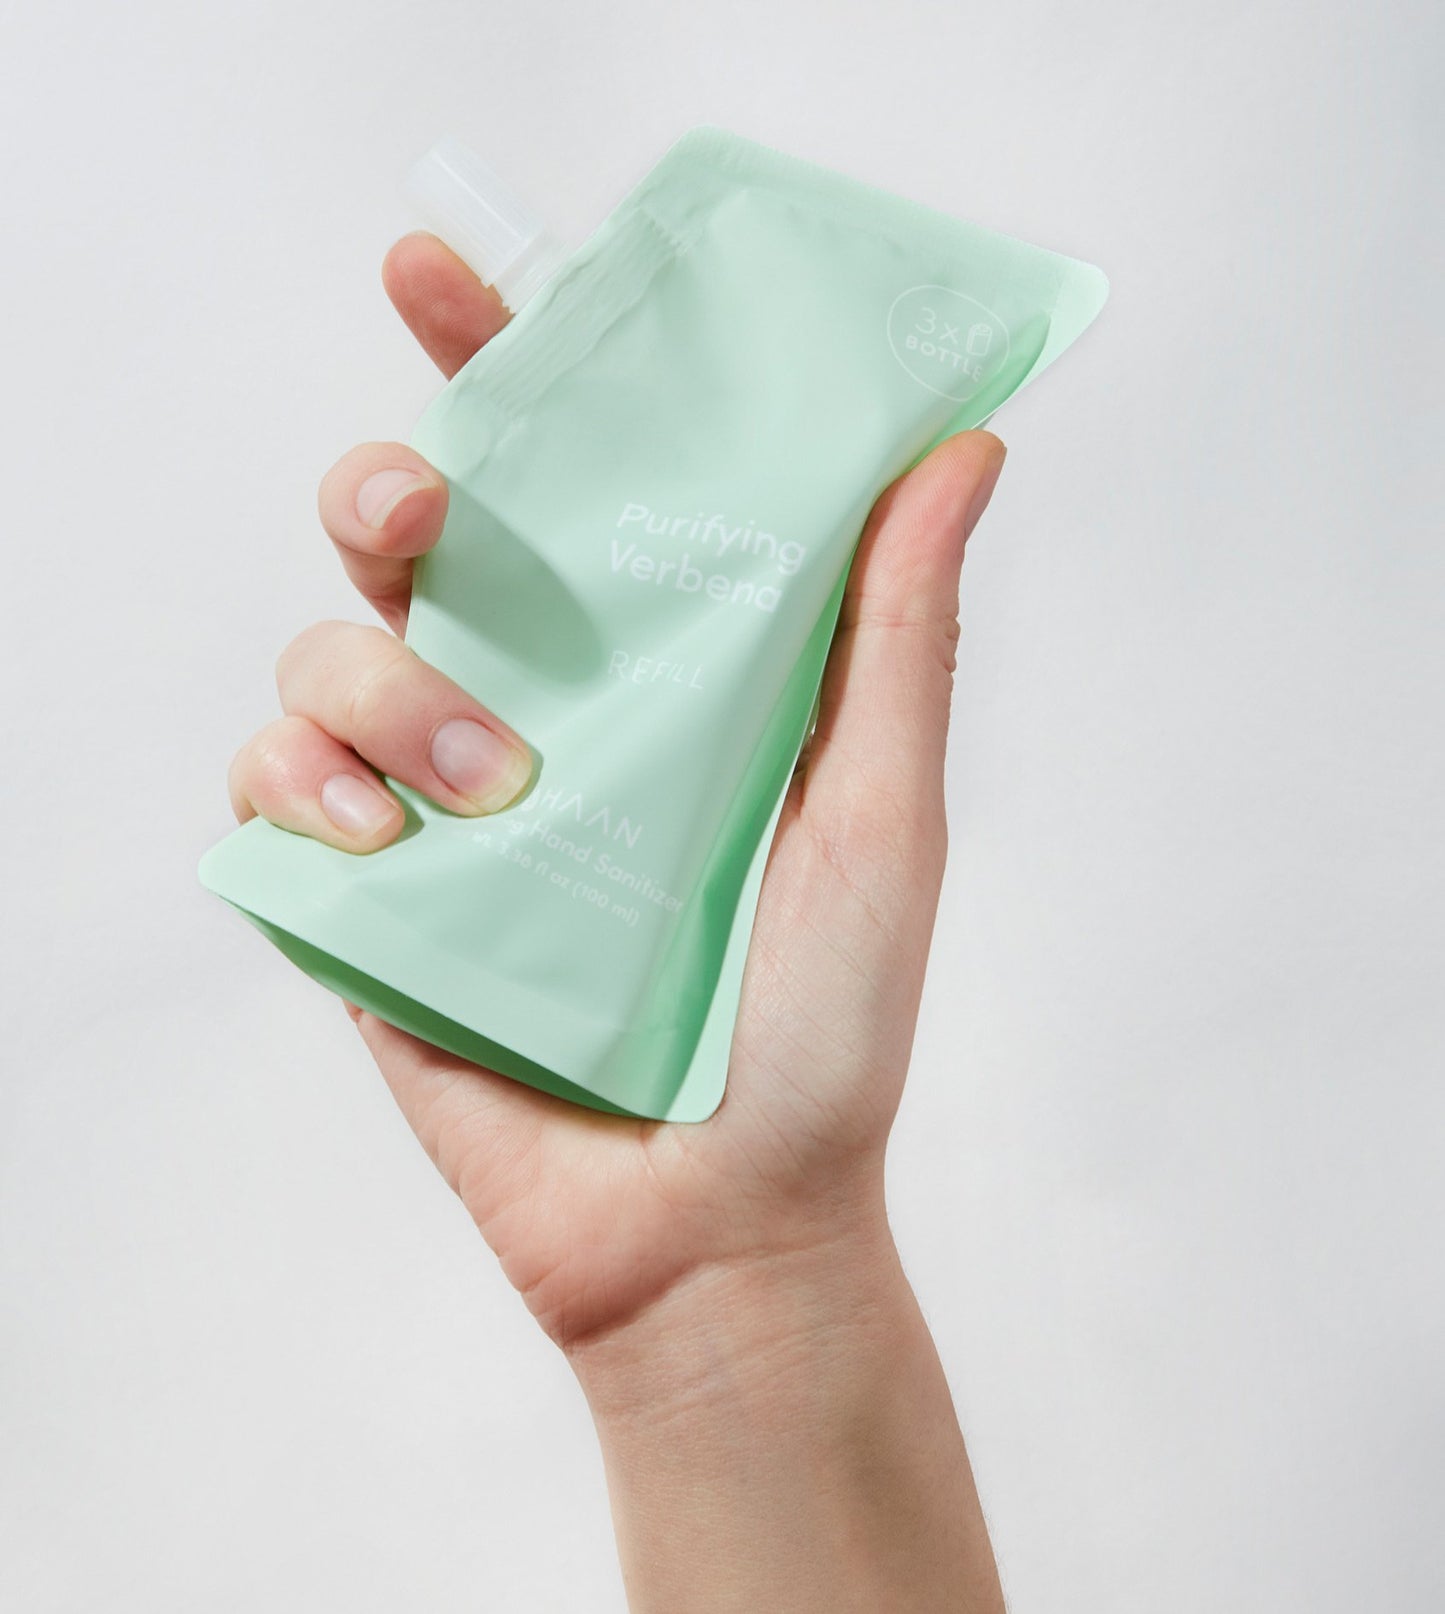 Pocket Hand Sanitizer Refill - Purifying Verbena - IOSOI Skin Lab